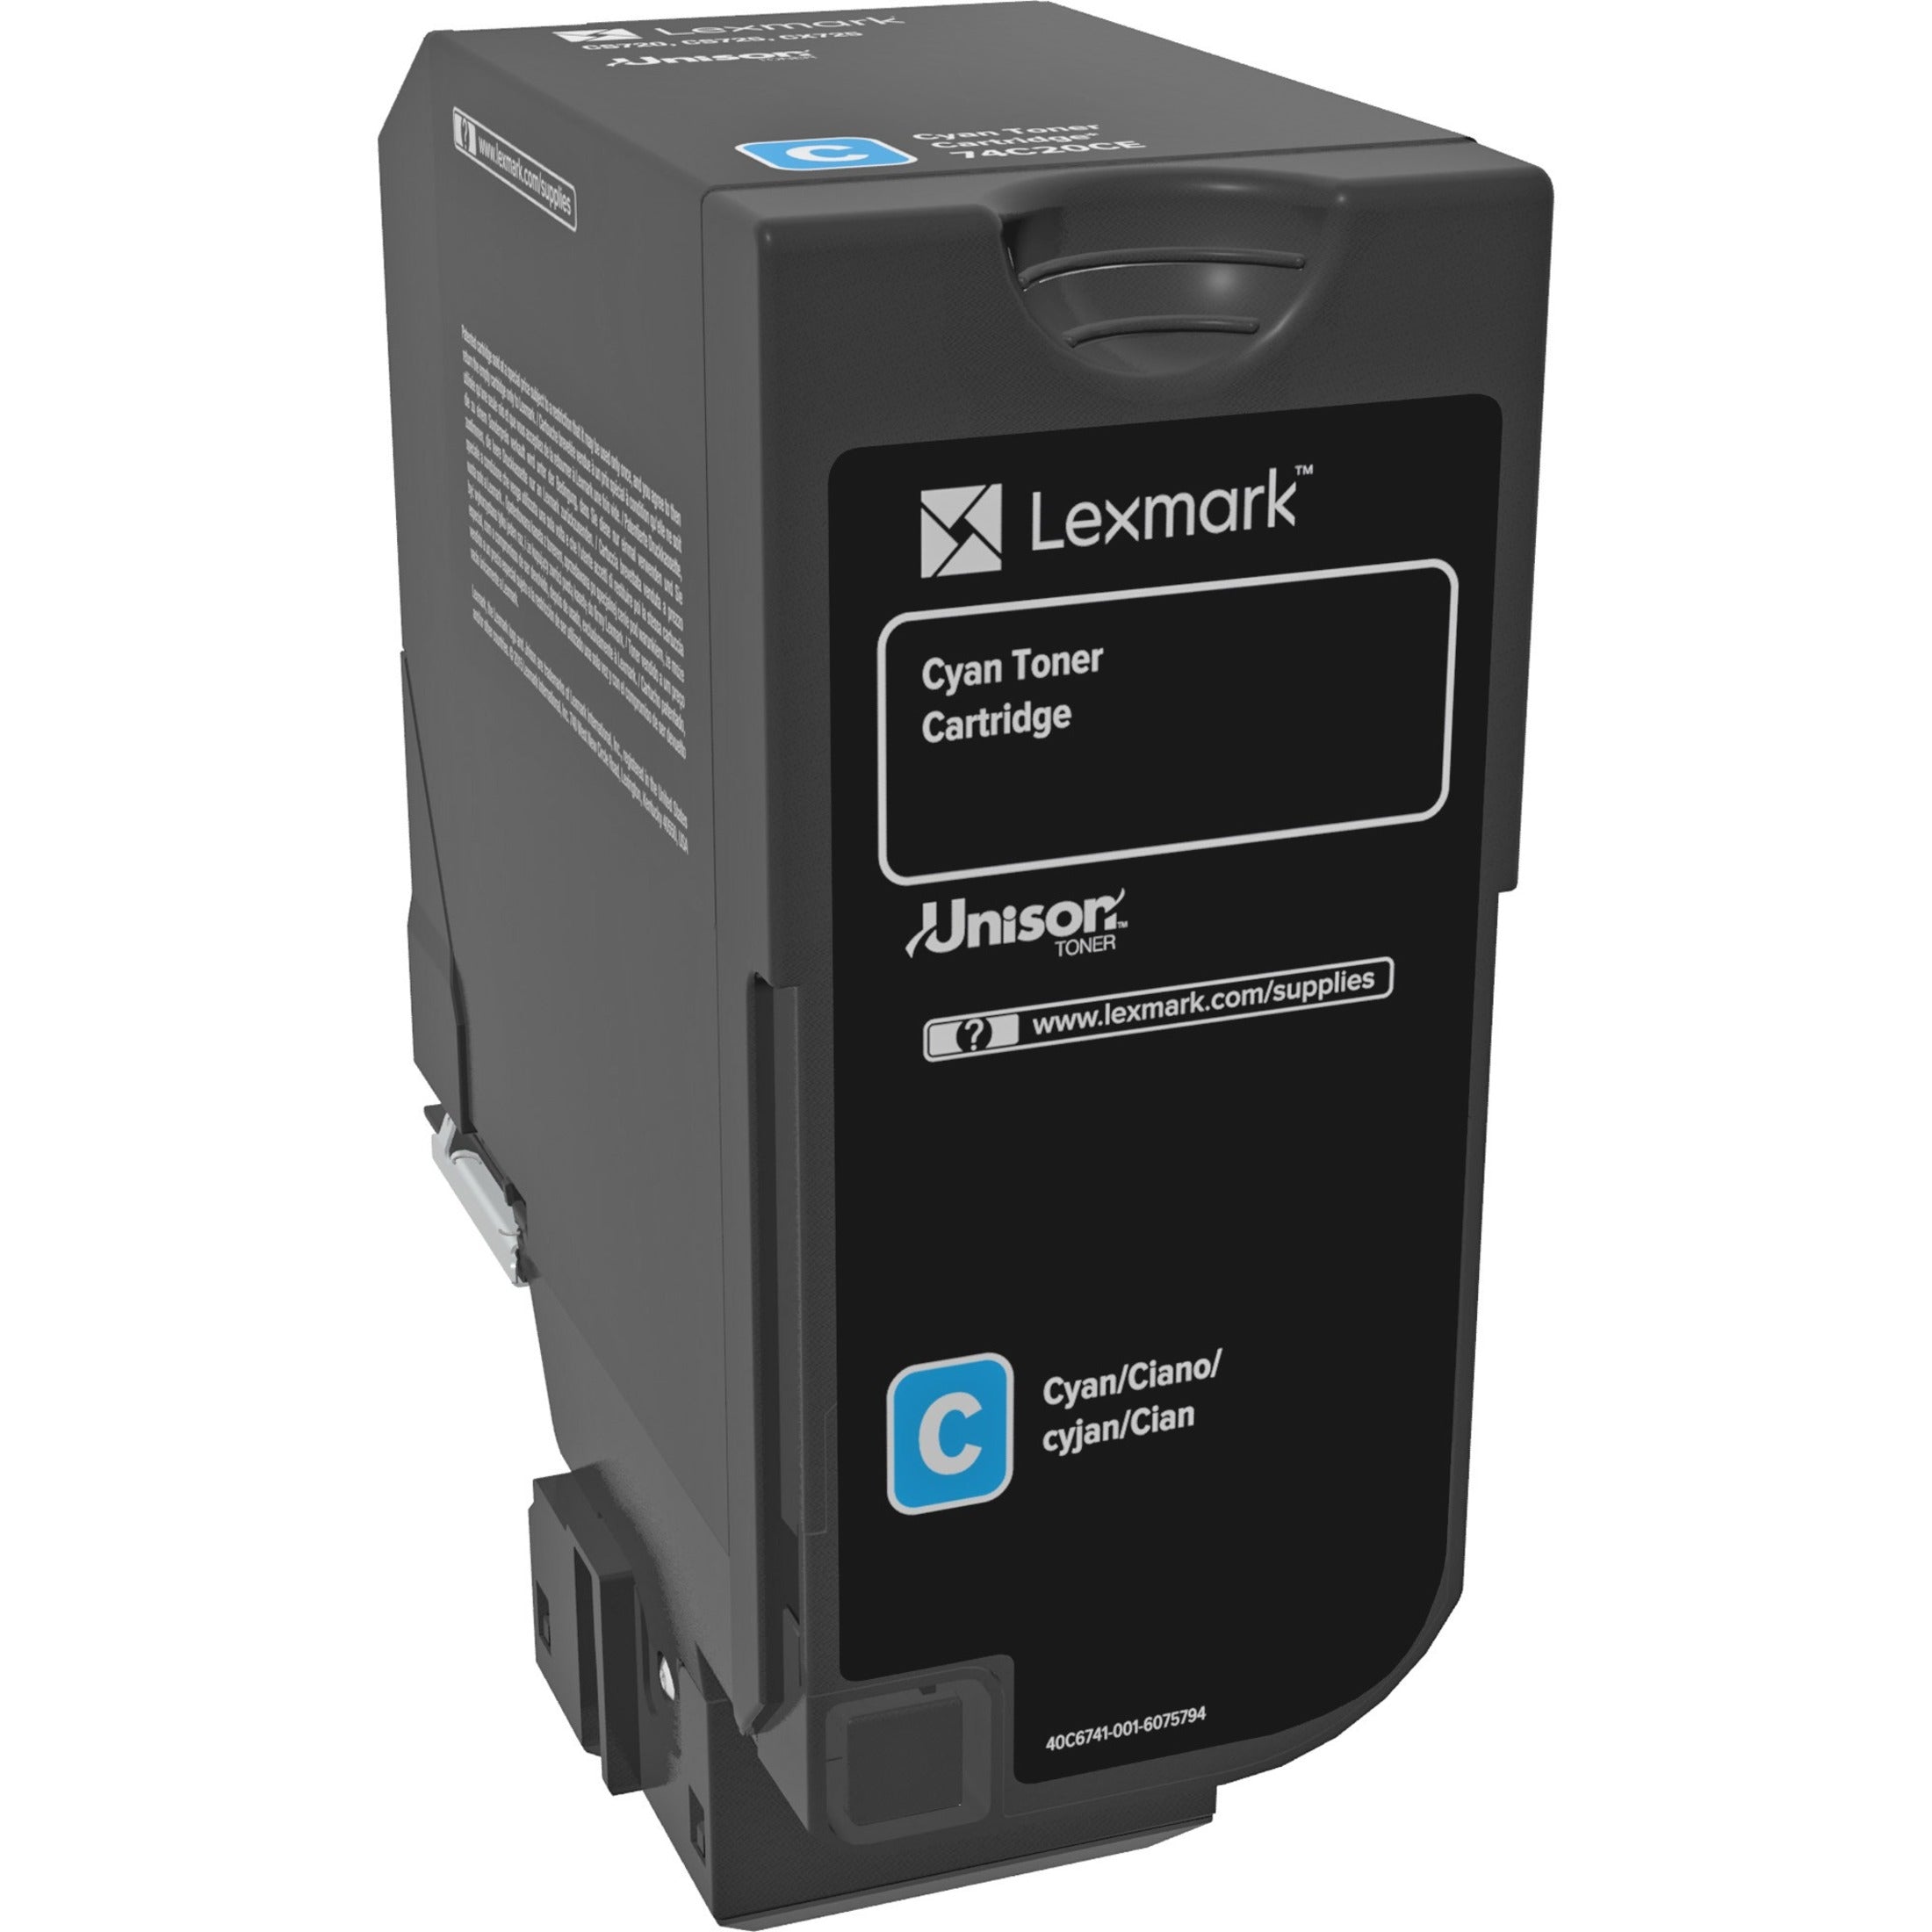 Lexmark 74C0S20 7K シアン トナーカートリッジ、 CS720、 7000 ページ収量  ブランド名: Lexmark Lexmark = レックスマーク